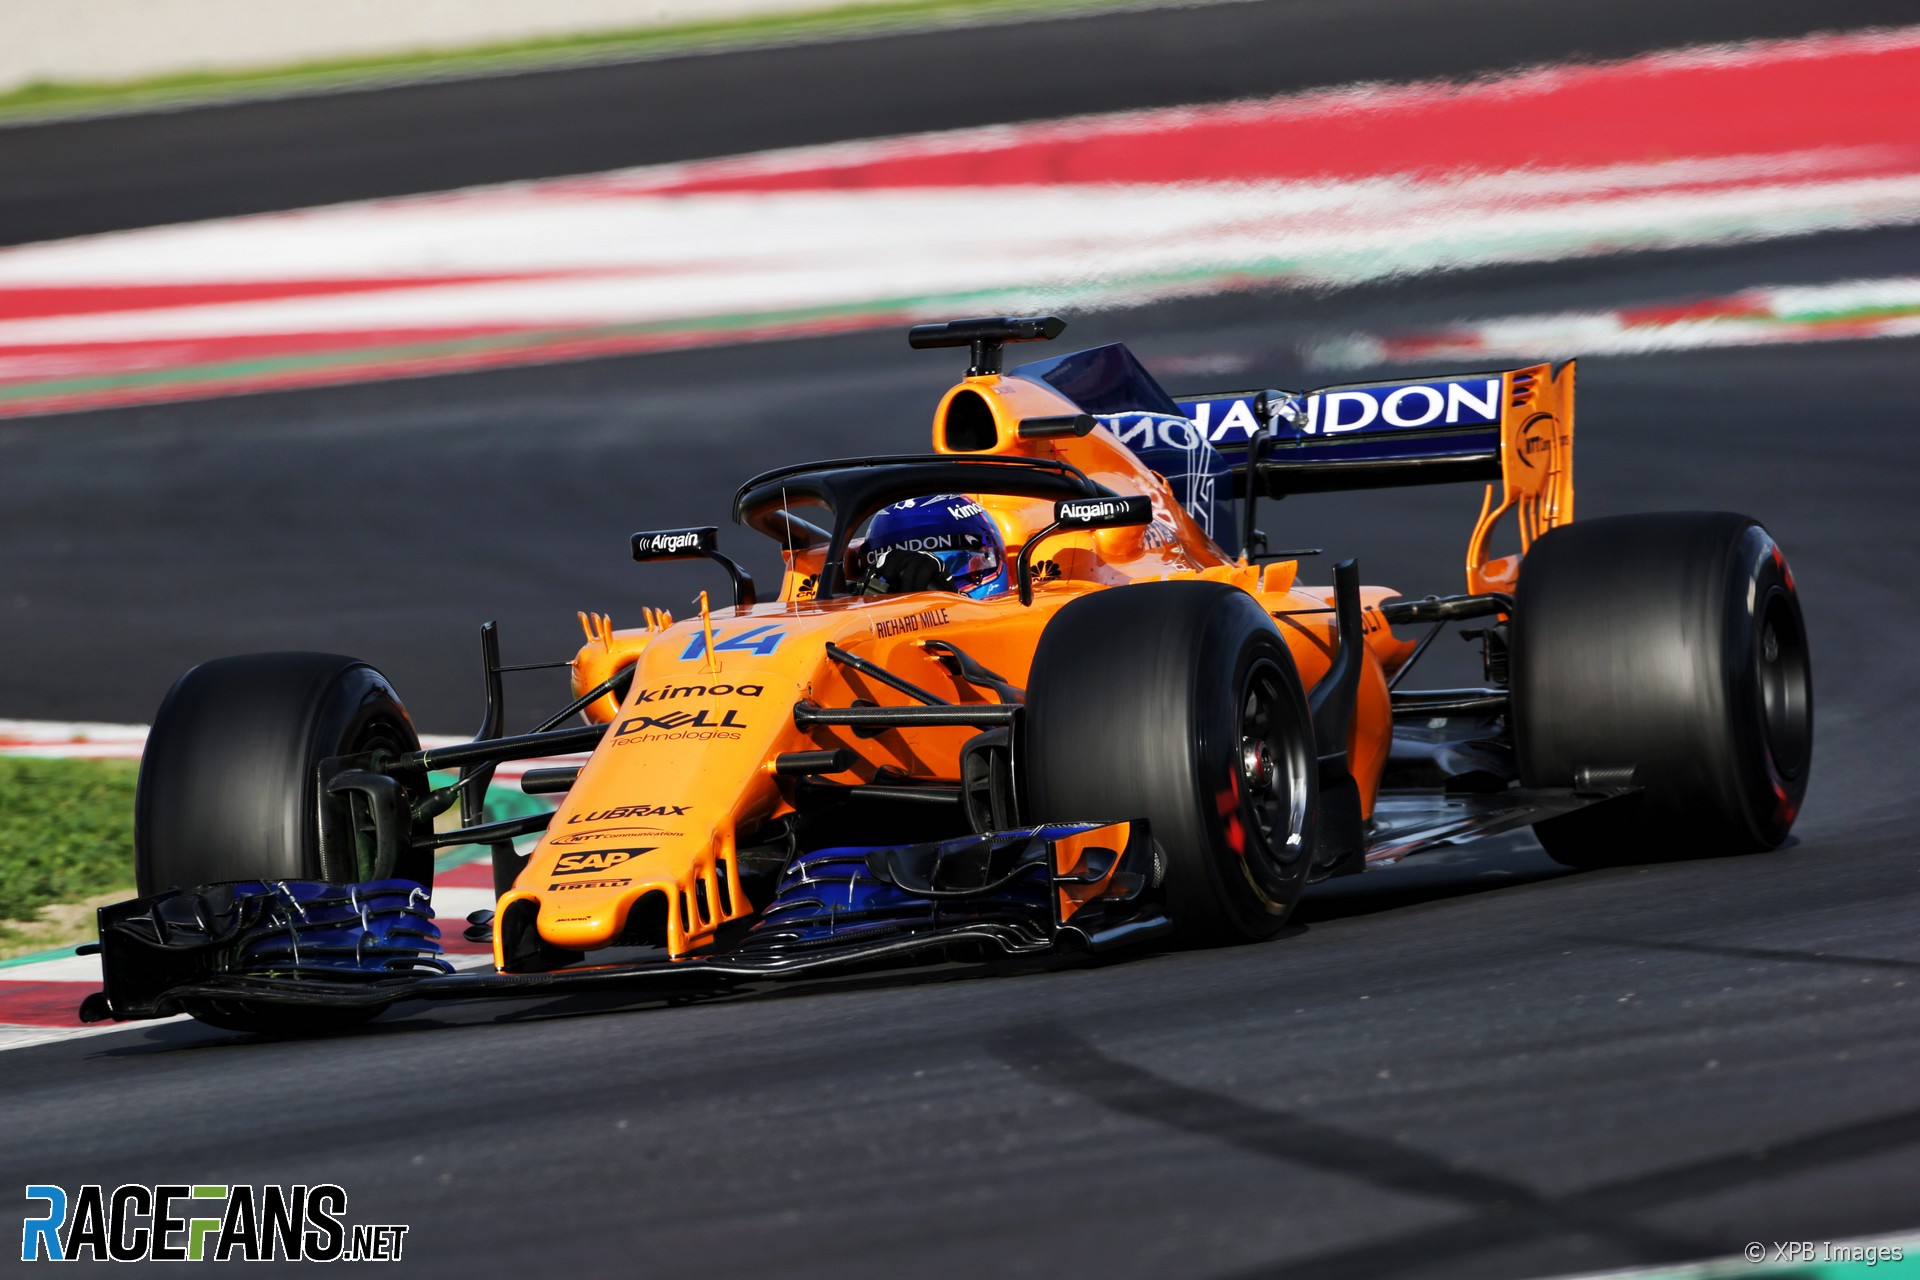 Fernando Alonso, McLaren, Circuit de Catalunya, 2018